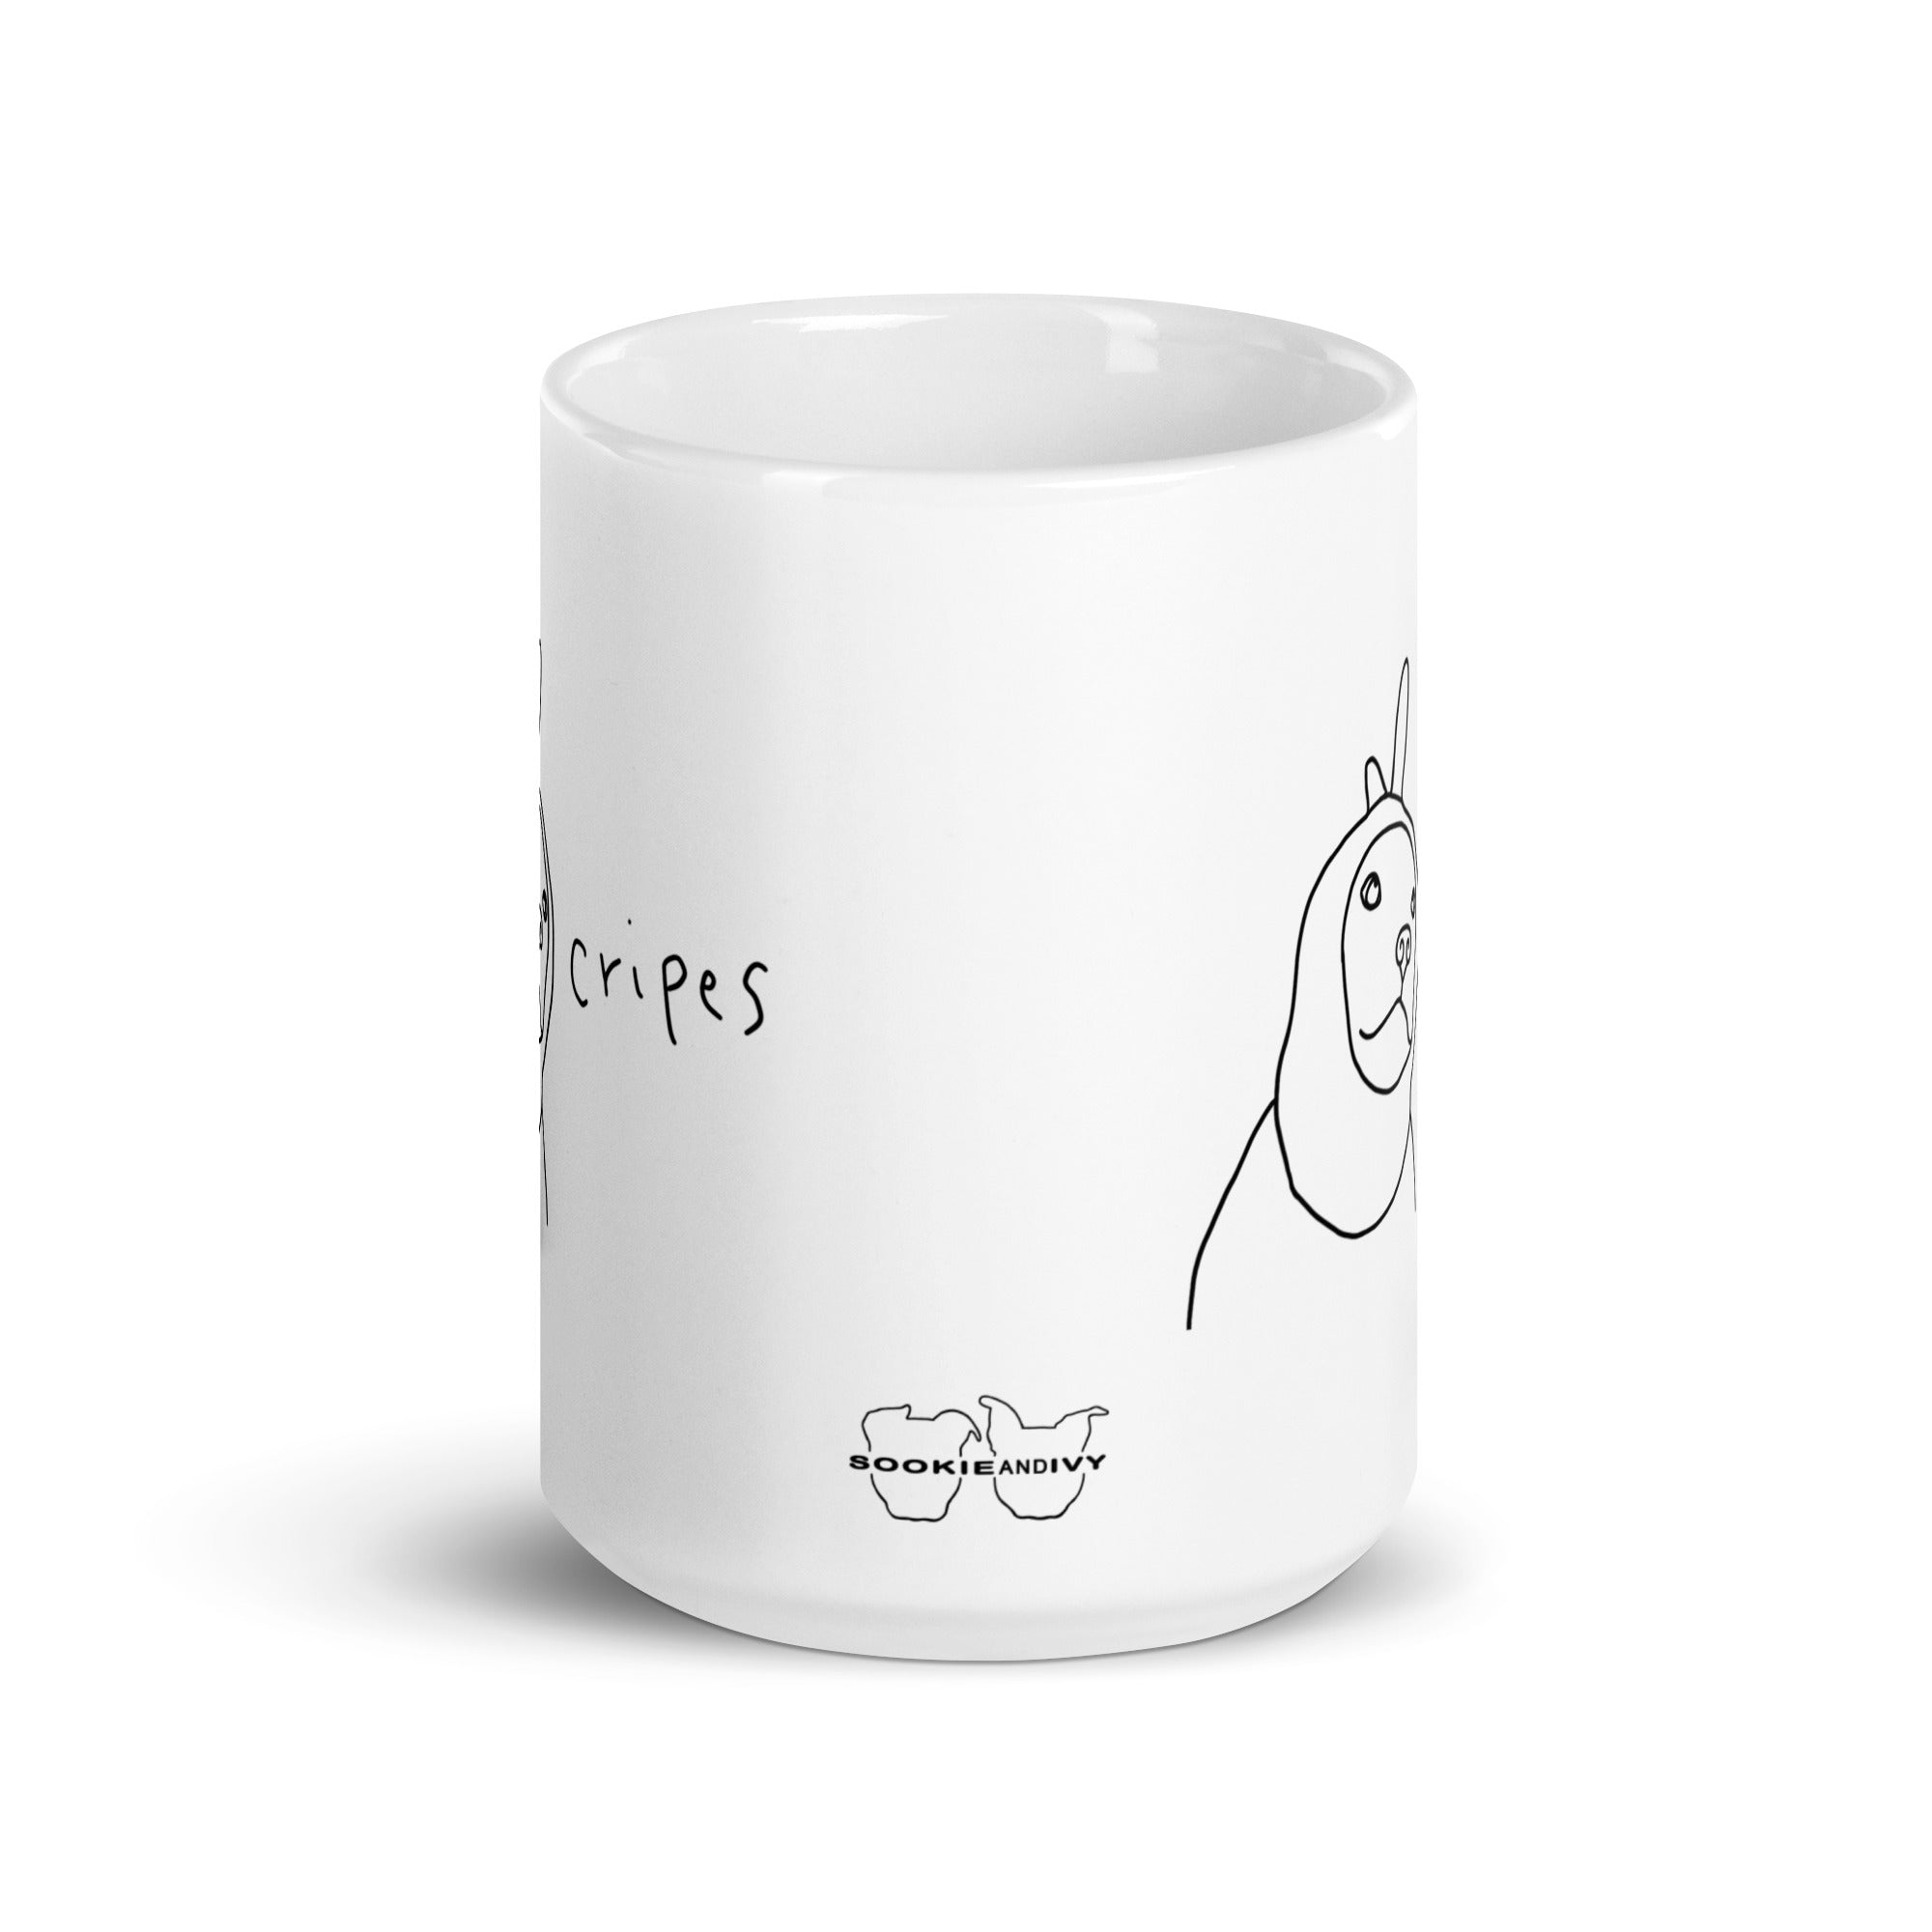 "Cripes" White glossy mug